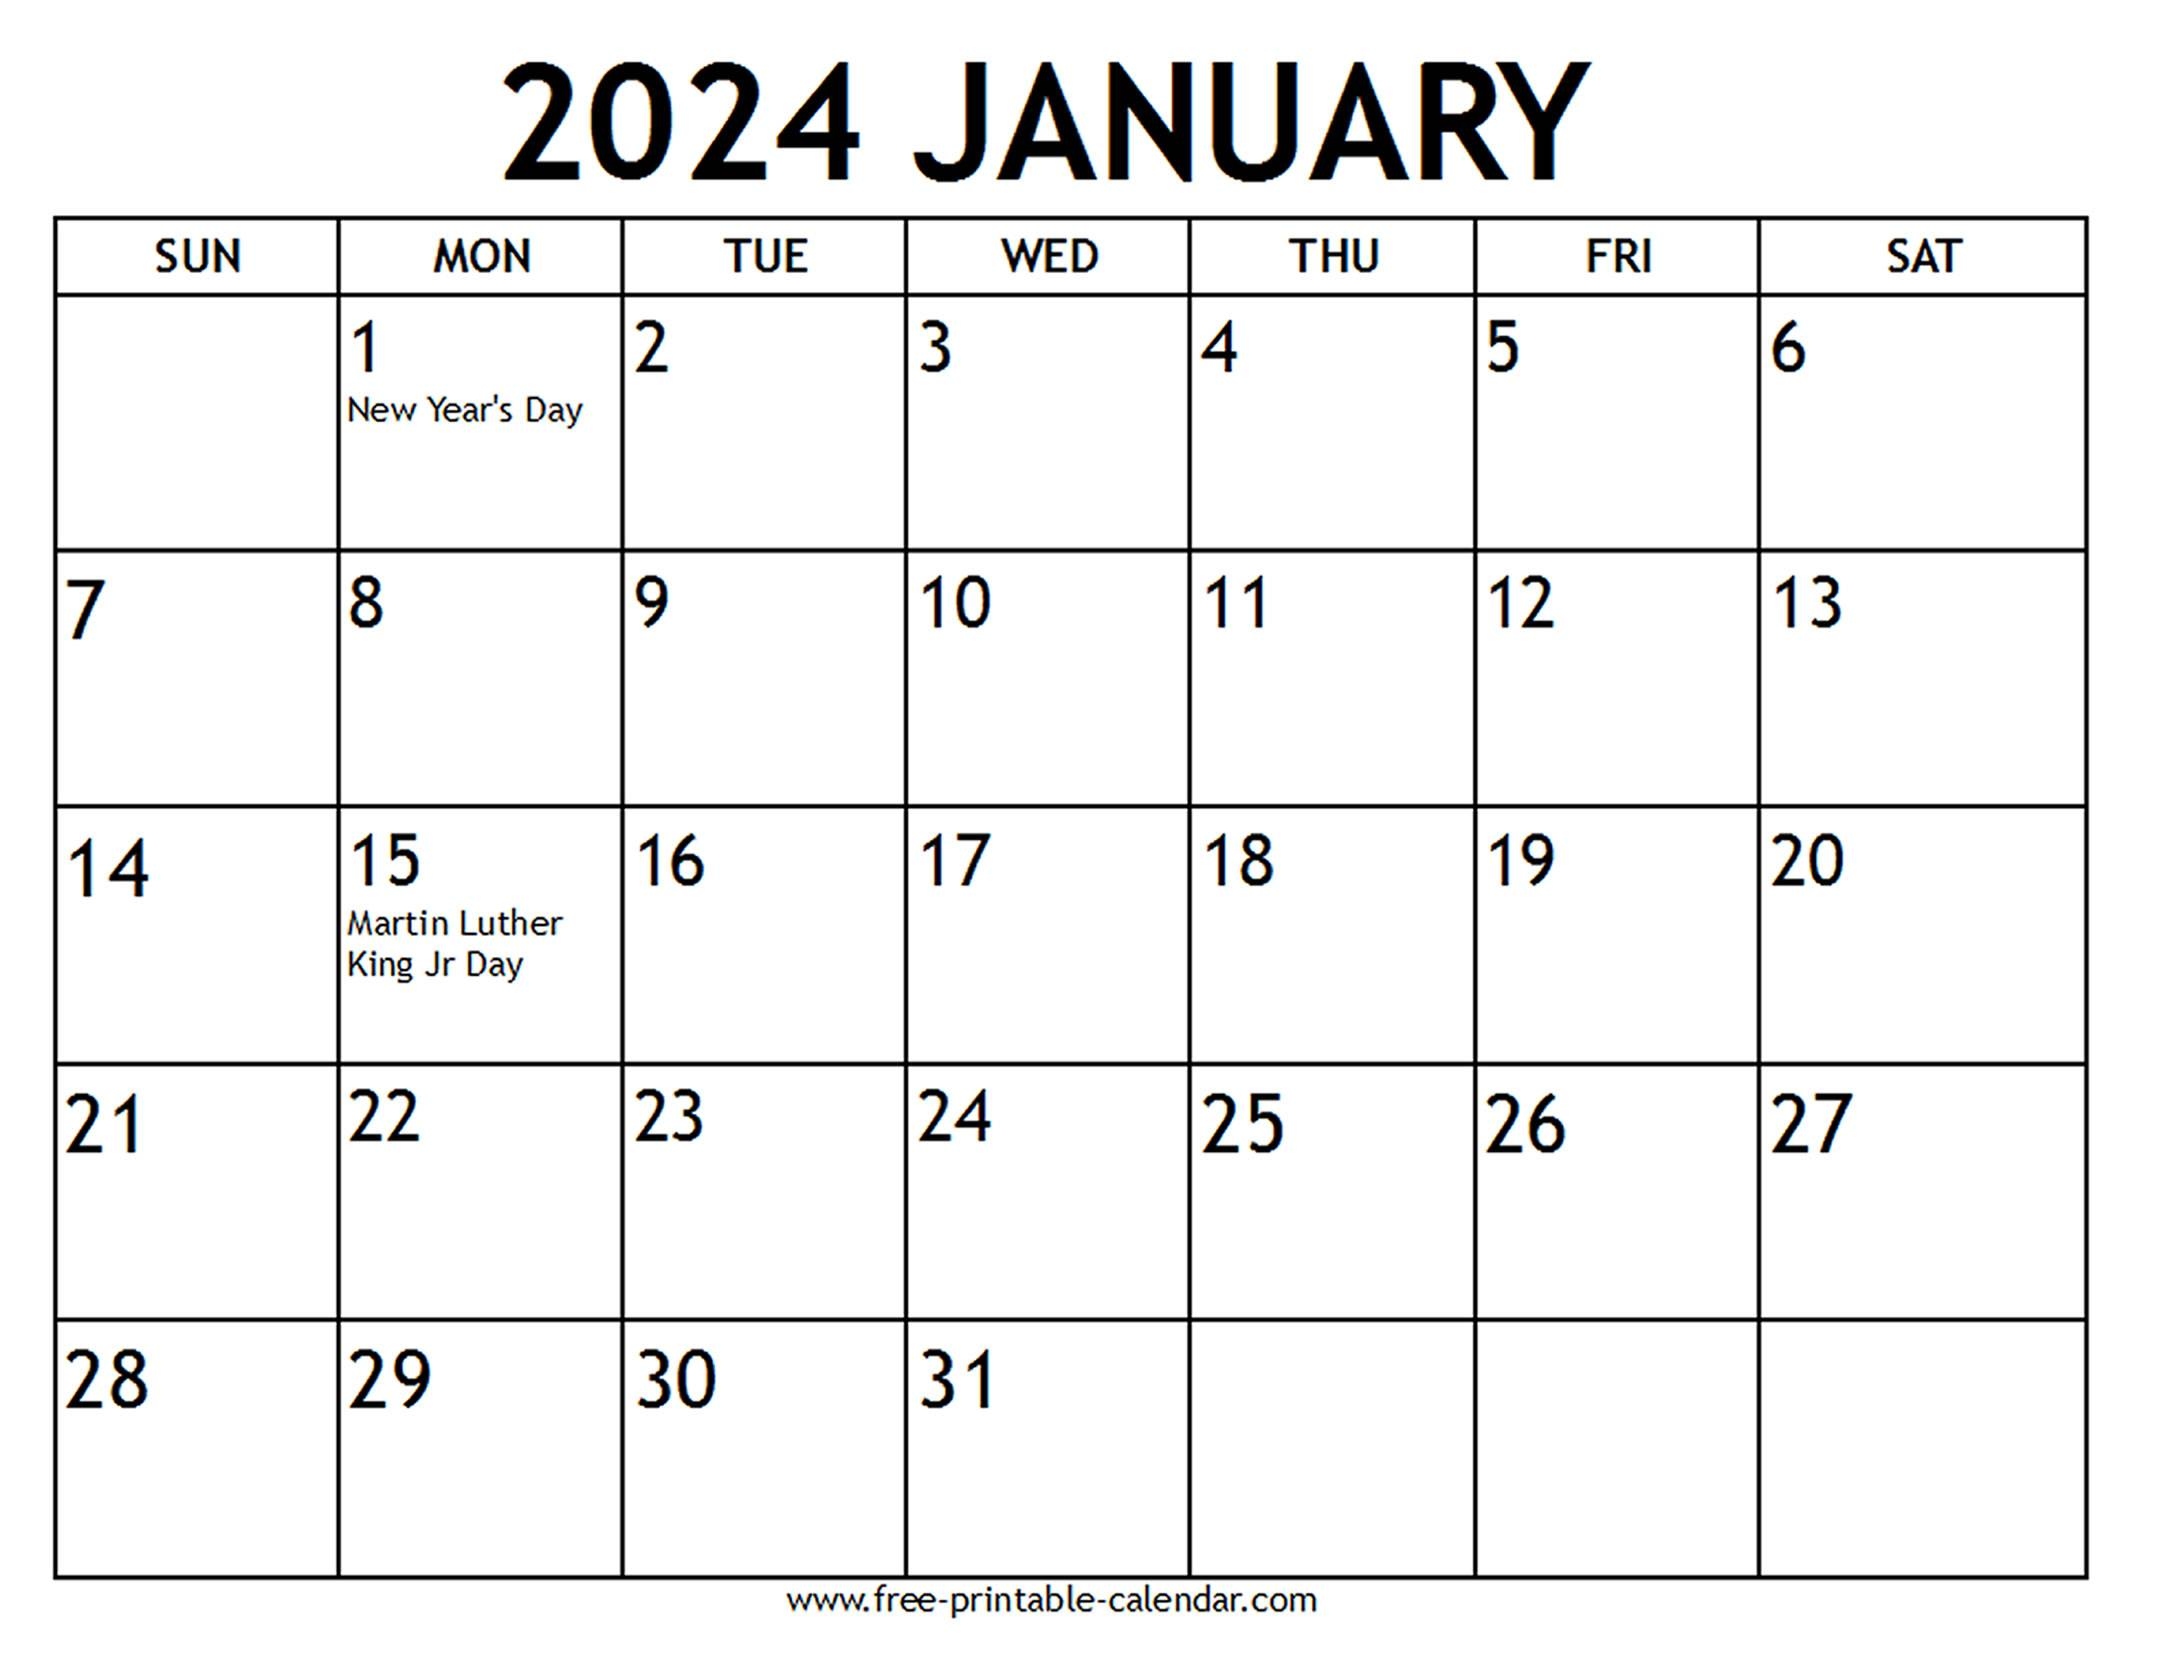 January 2024 Calendar Us Holidays - Free-Printable-Calendar within Free Printable Calendar 2024 With Us Holidays